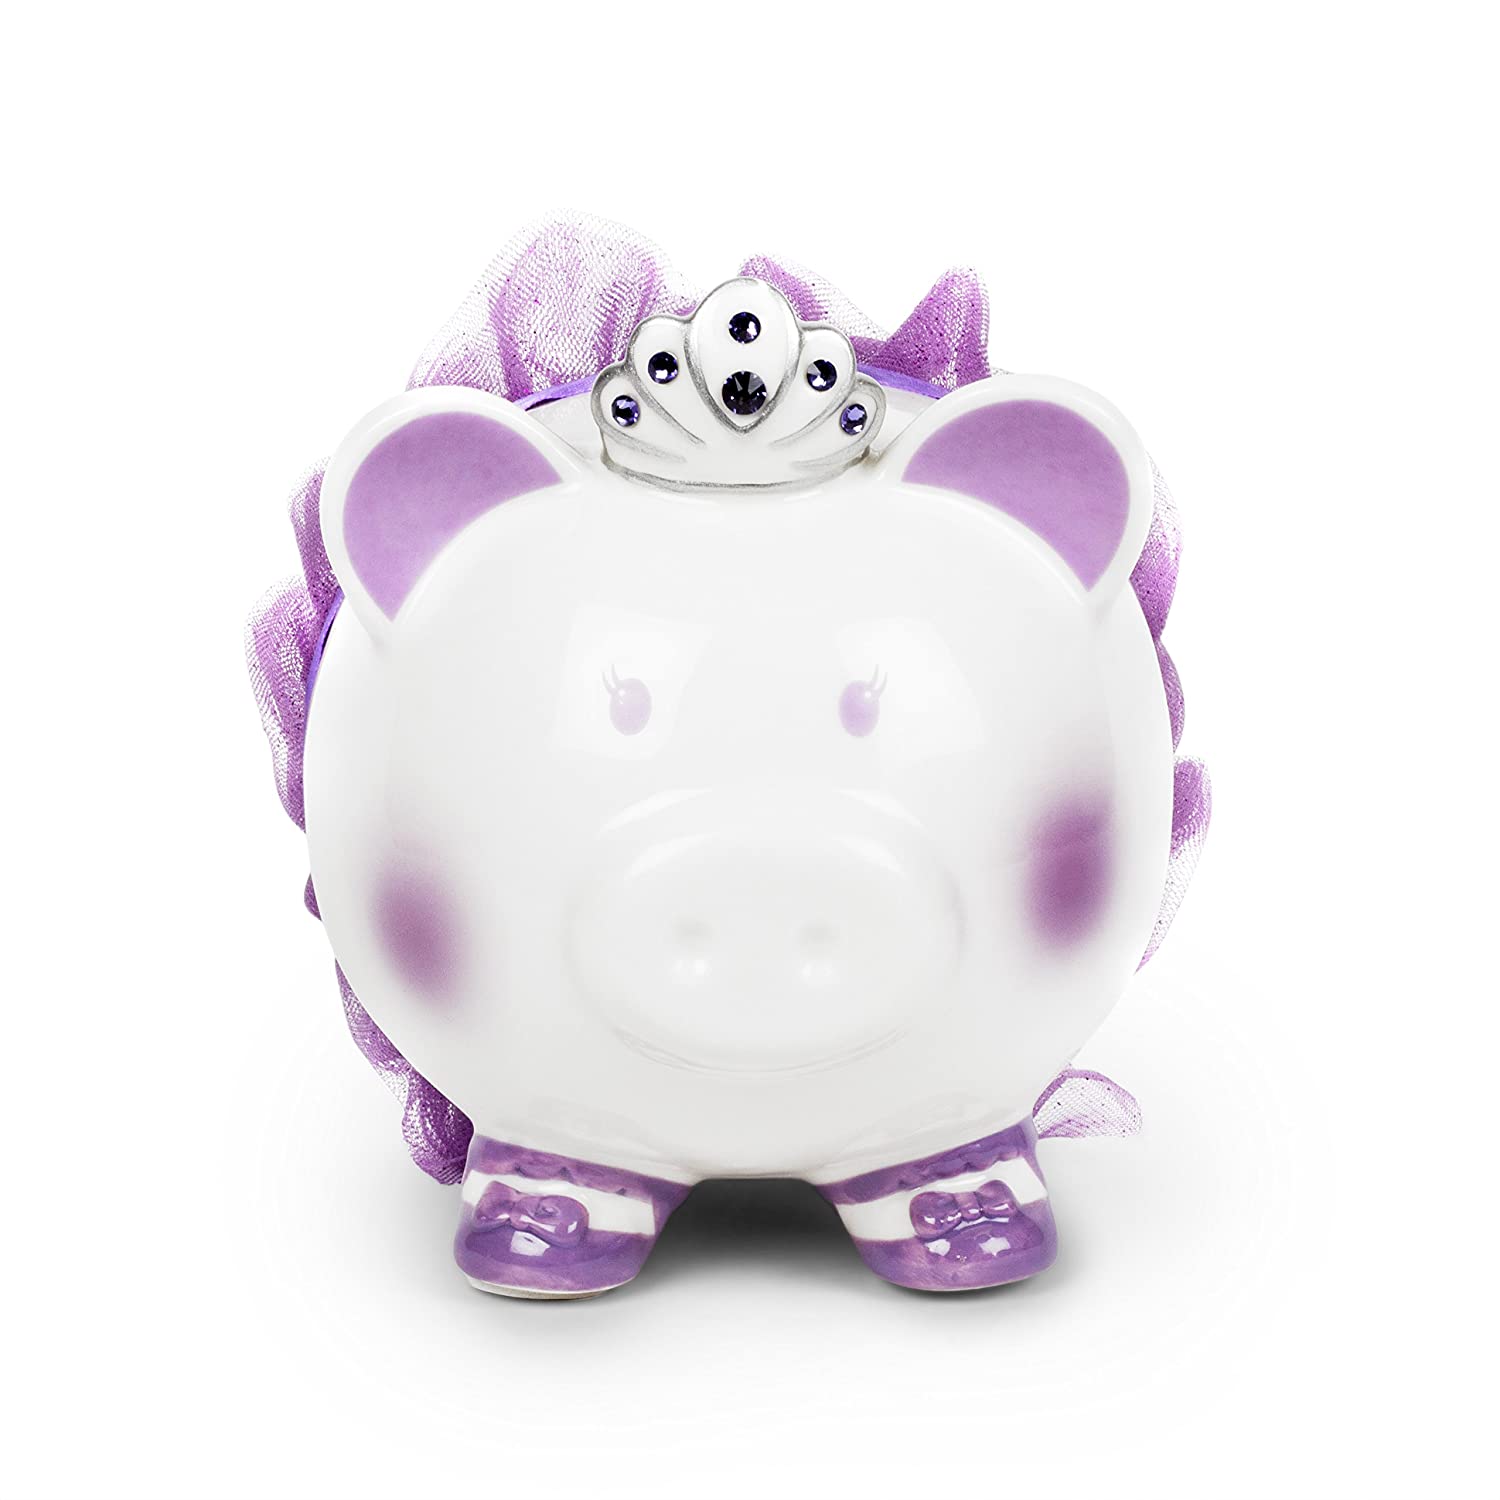 FAB Starpoint Swarovski with Crown Princess Porcelain Piggy Bank for Kids